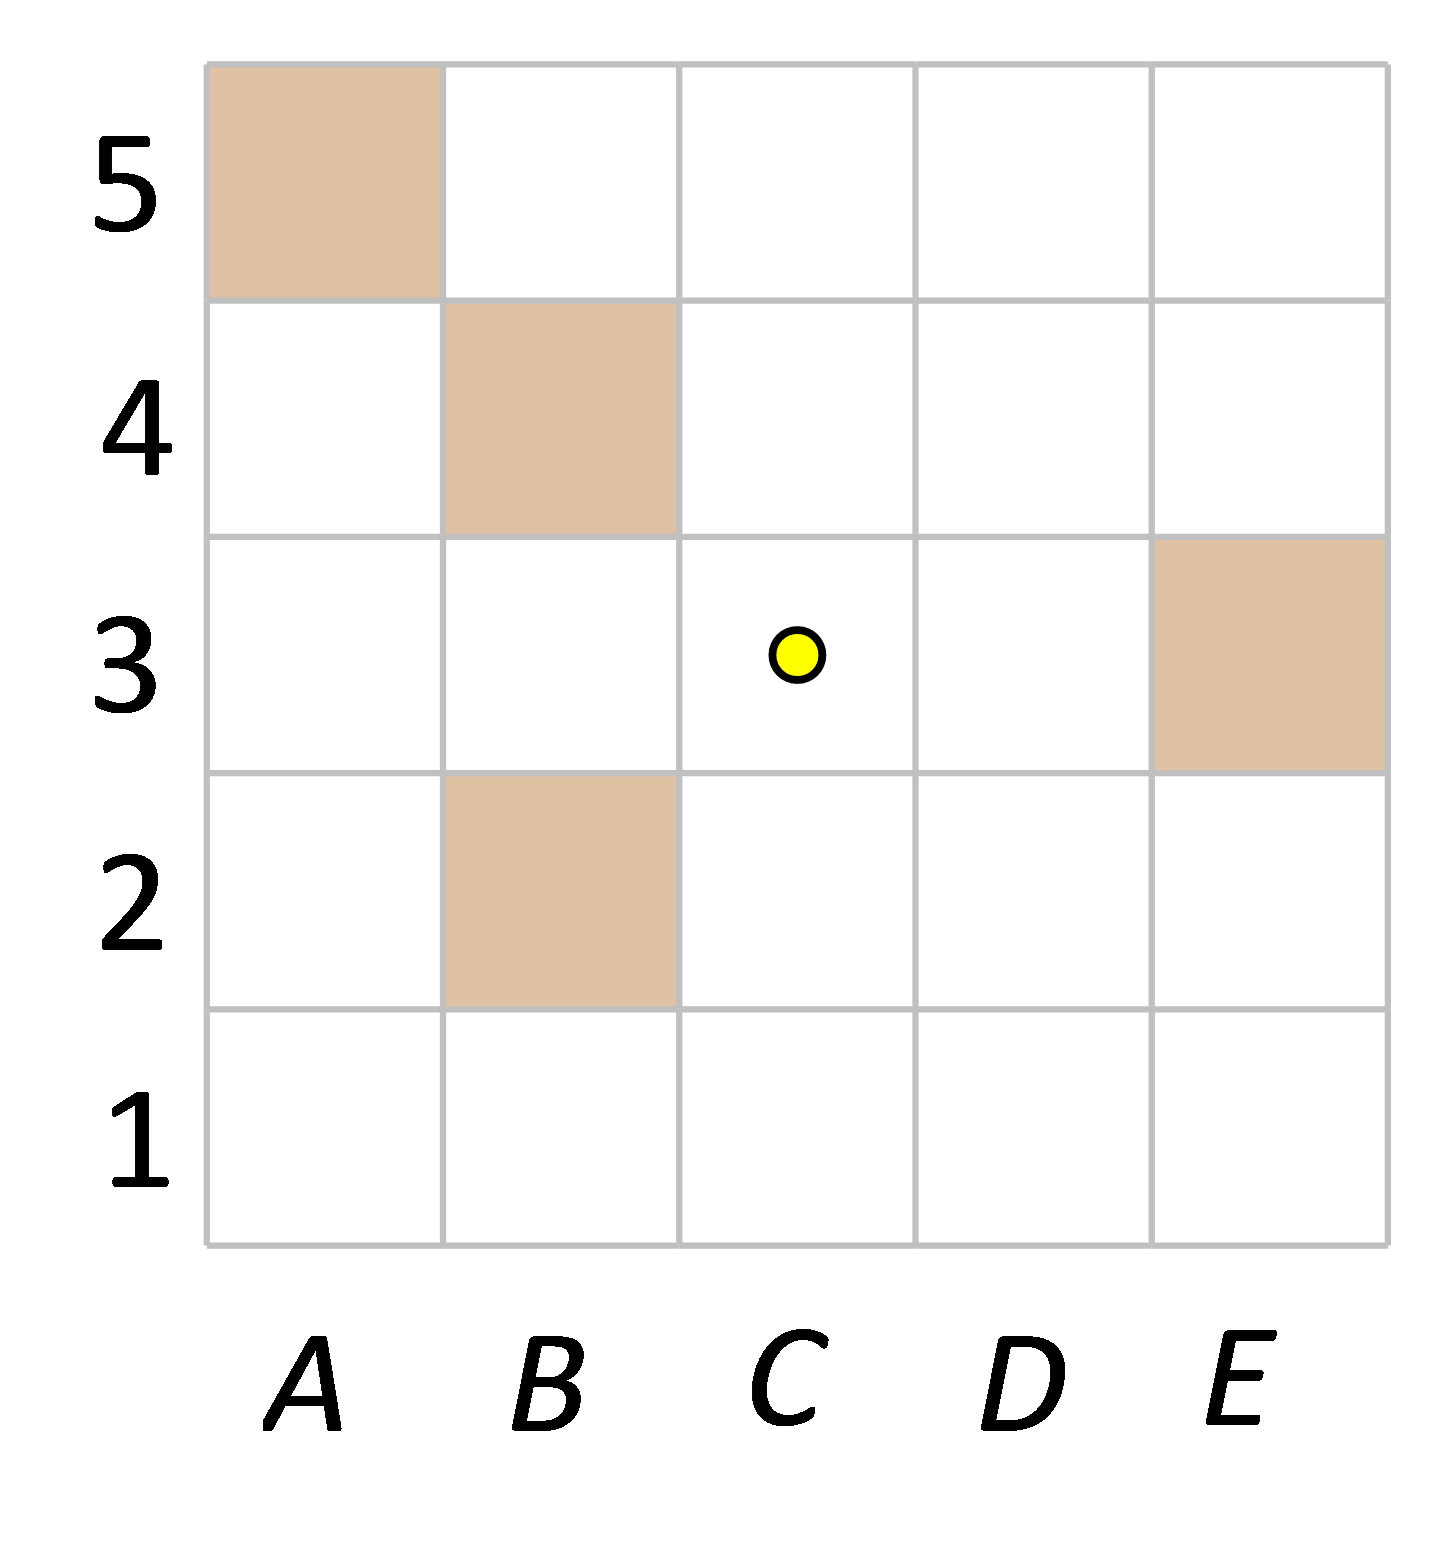 Na slici je prikaz kvadratne mreže s upisanim obojanim kvadratima.Vodoravni položaj je označen slovima A, B, C, D i E, a vertikalni brojevima 1, 2, 3, 4 i 5. Istaknuta je točka u sredini kvadrata.